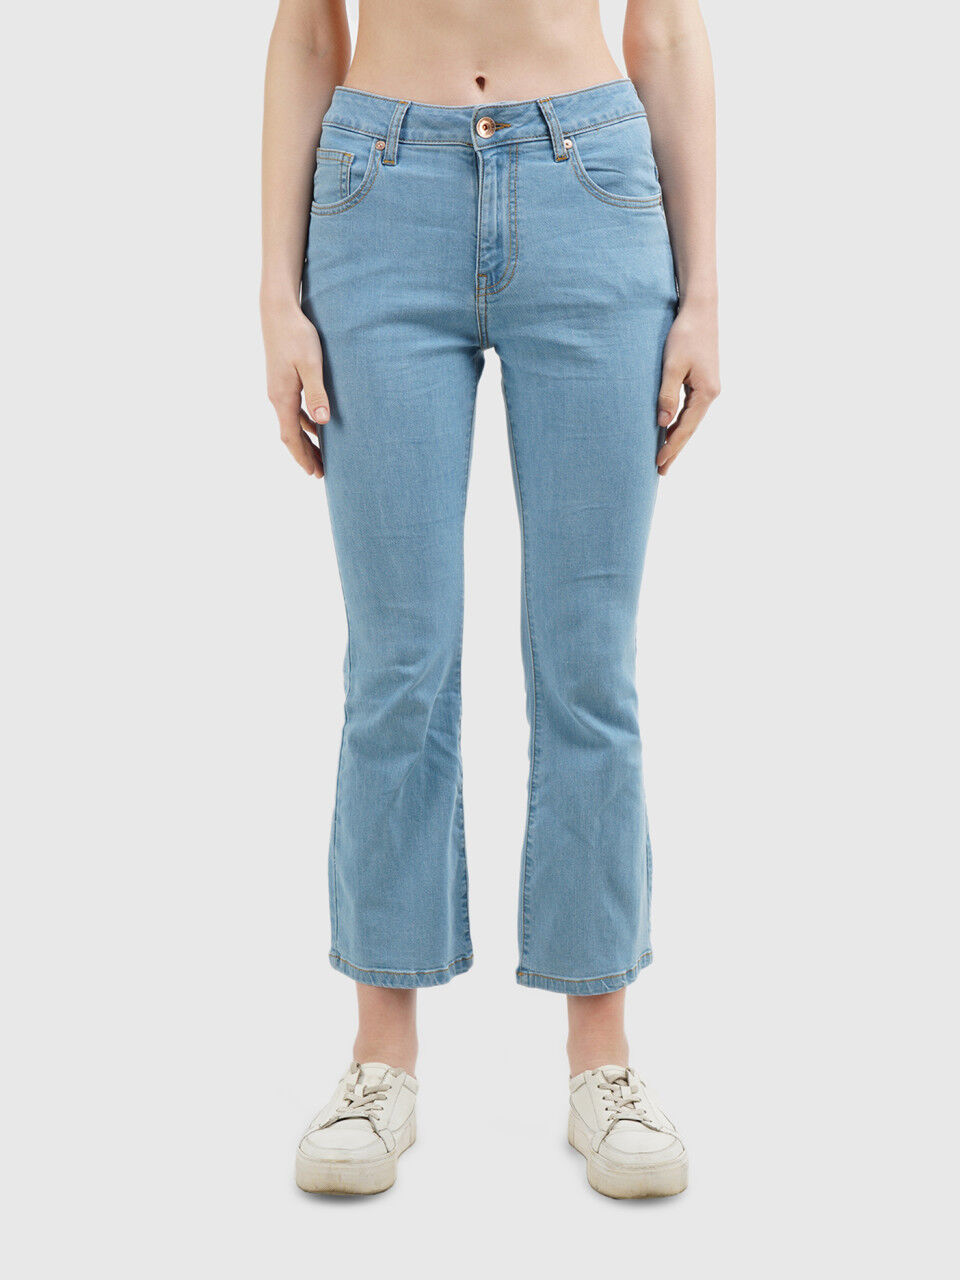 discount 96% Benetton maternity jeans Blue XS WOMEN FASHION Jeans Maternity jeans Basic 